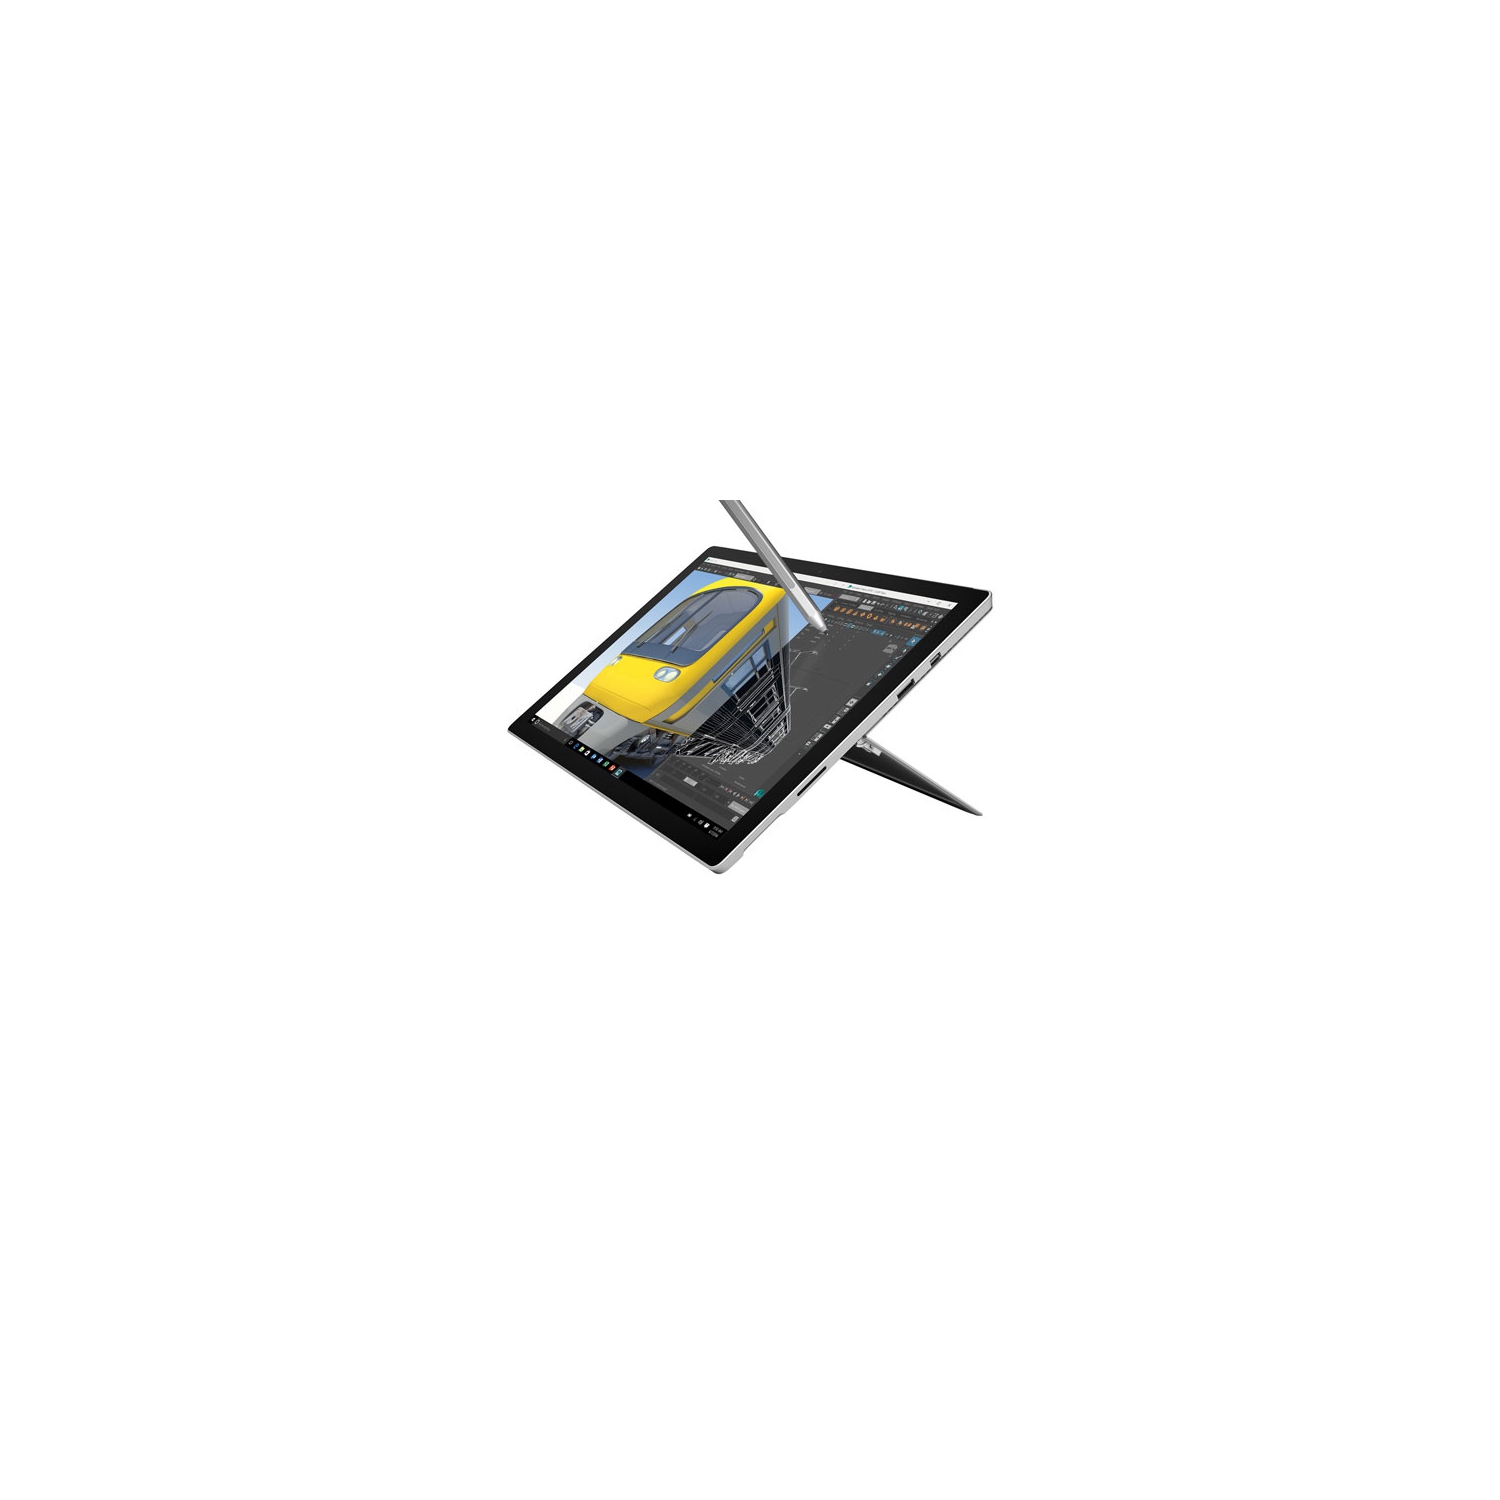 Refurbished (Fair) - Microsoft Surface Pro 4 12.3" 256 Windows 10 Tablet With 6th Gen Intel Core i5-6300U - Silver